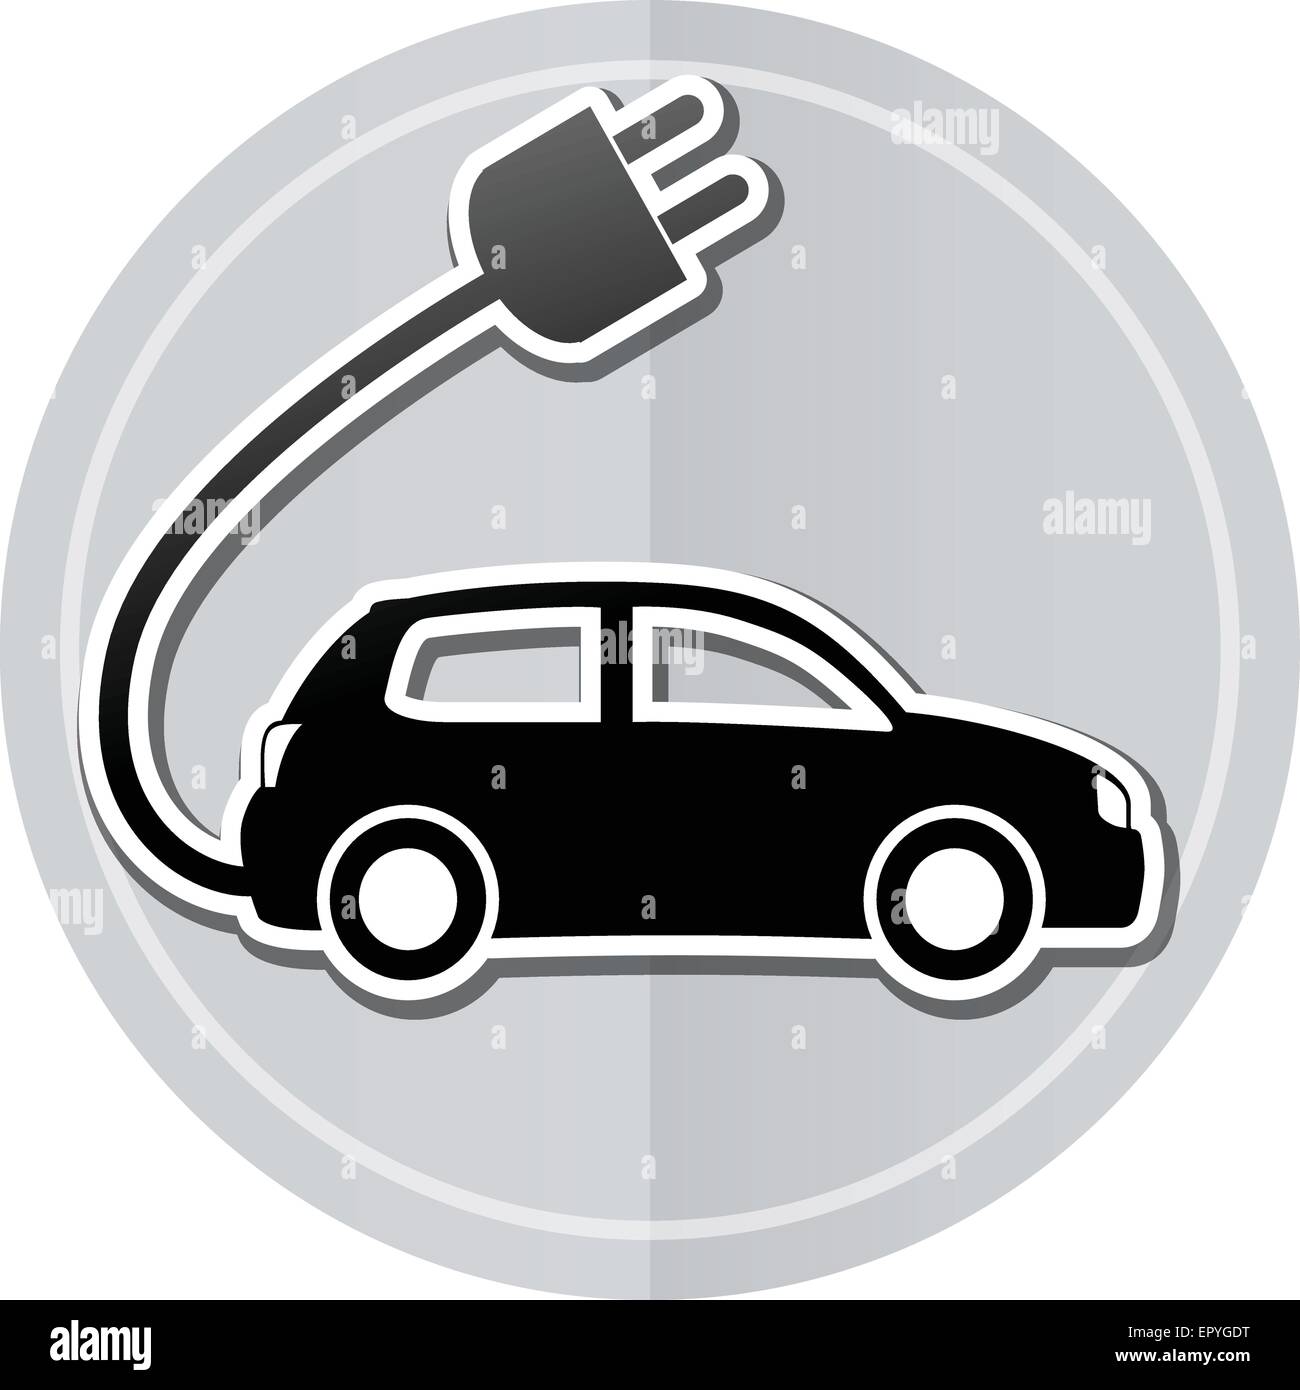 Illustration of electric car sticker icon simple design Stock Vector